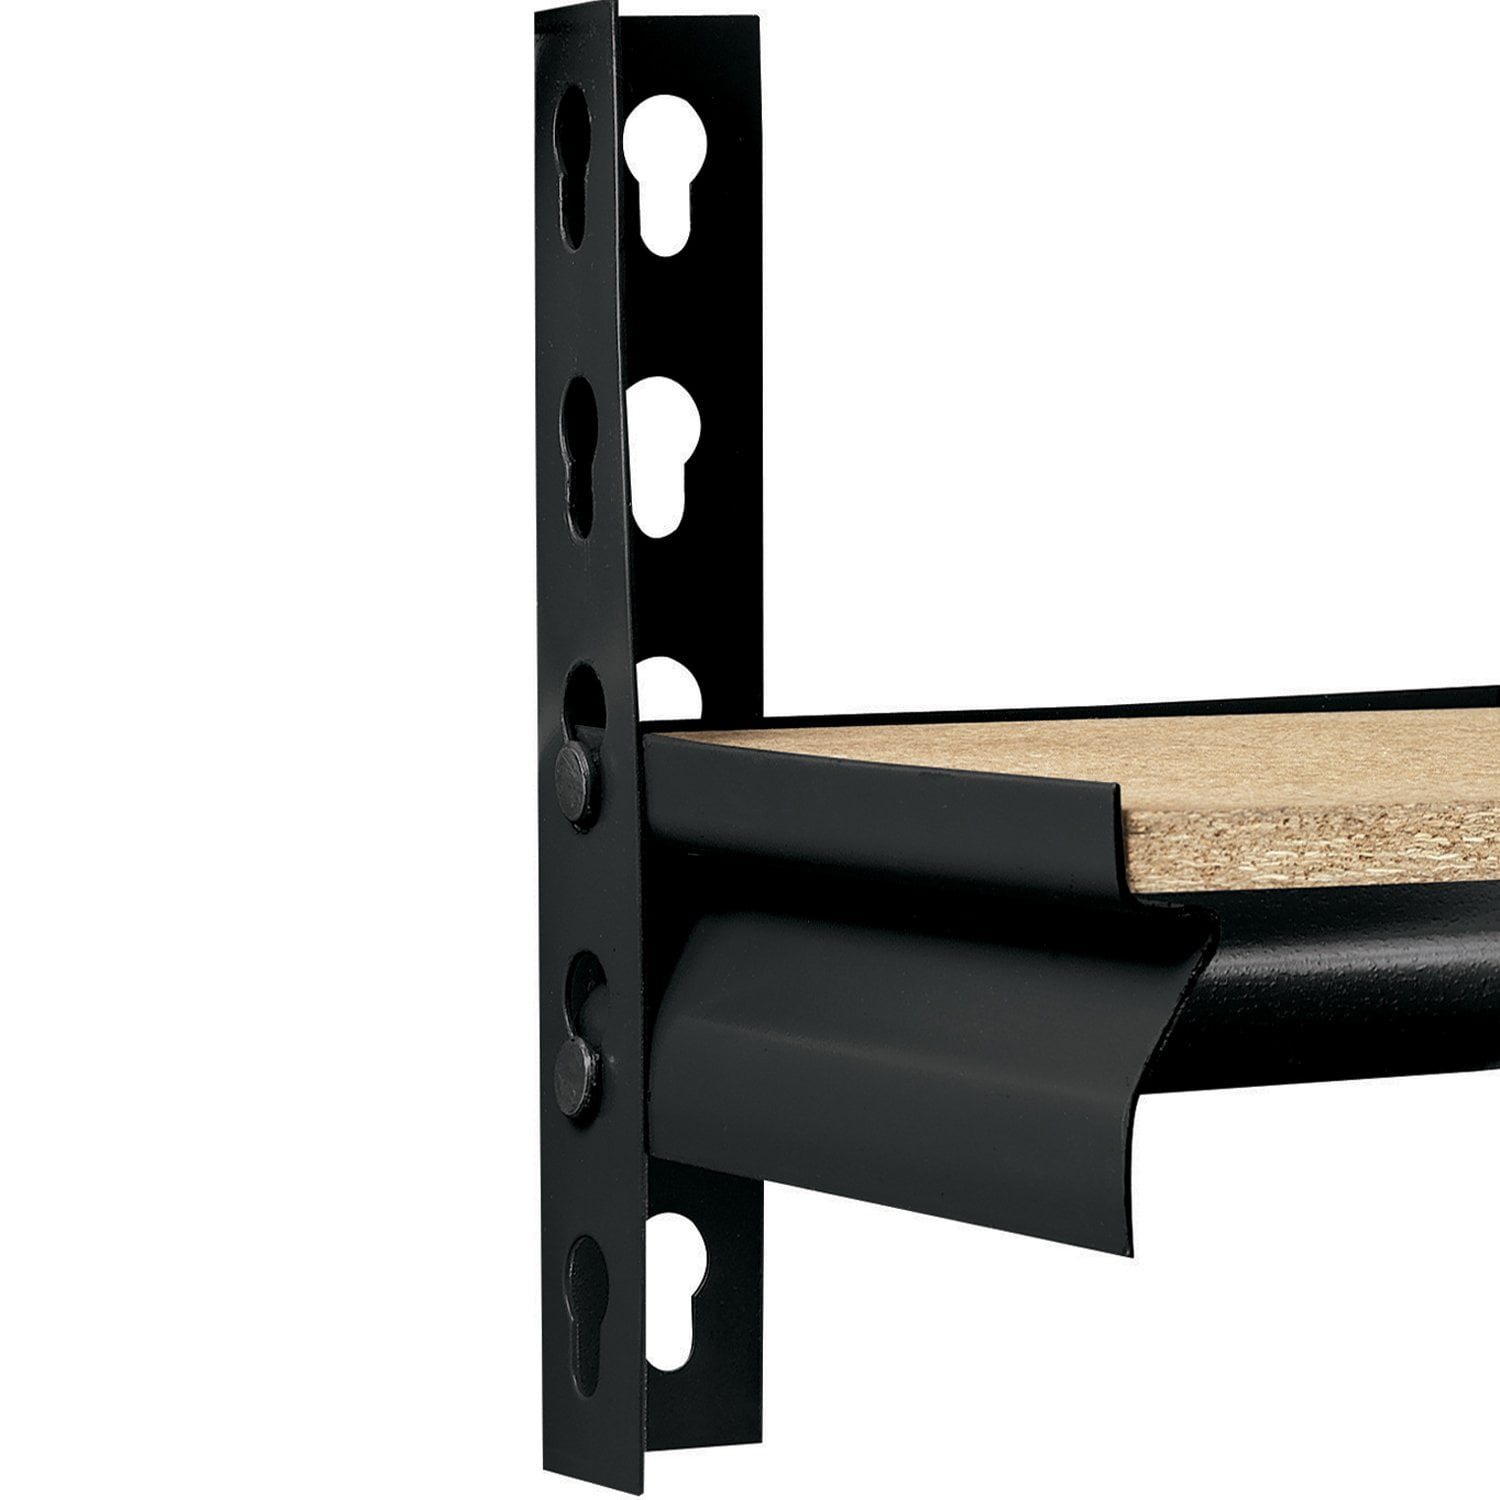 Mini-racking, steel shelves (72W x 36D x 87H)